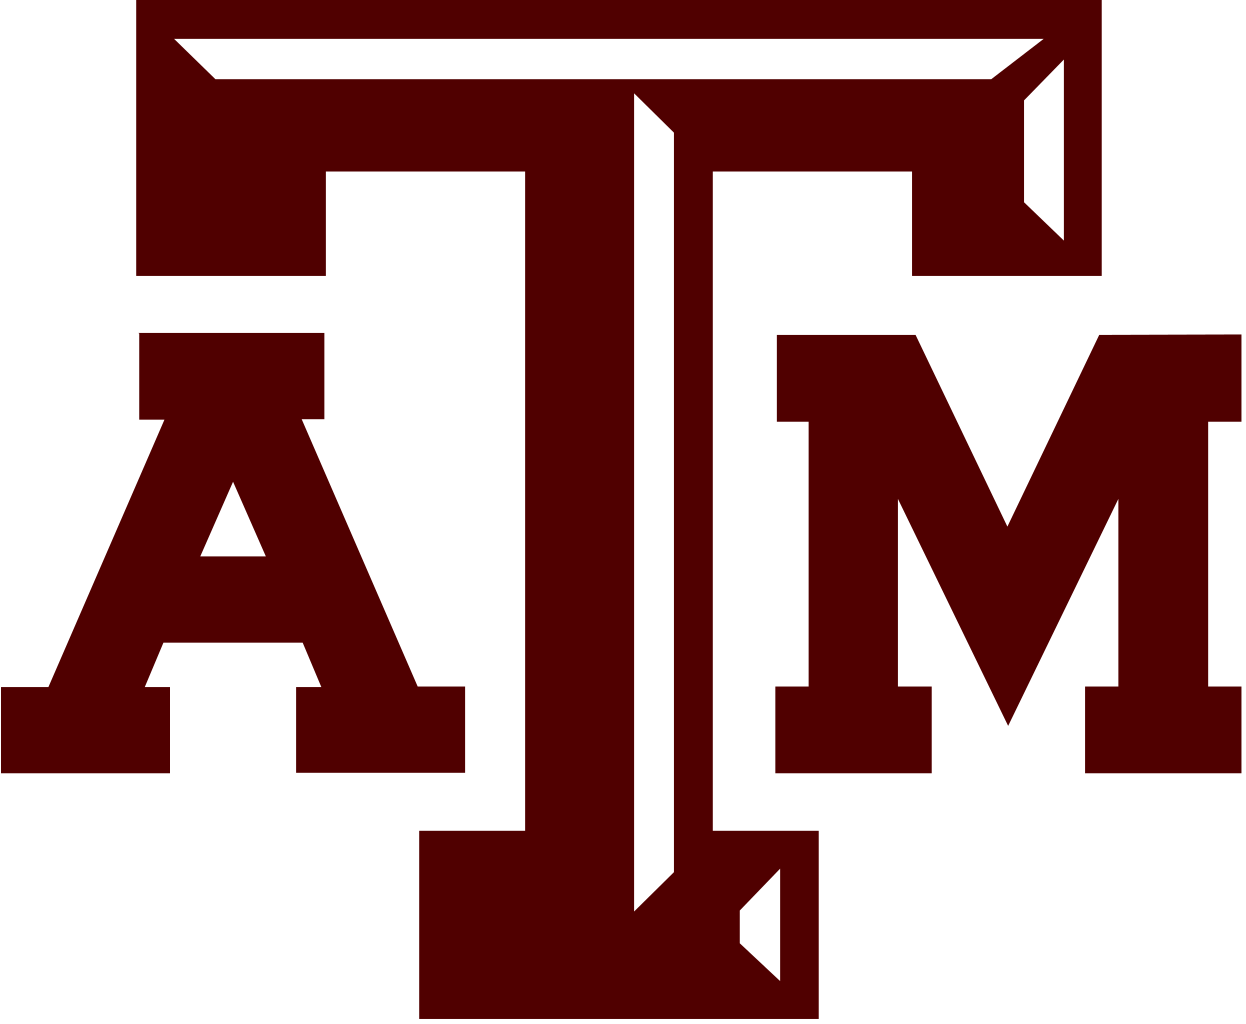 1246px-Texas_A&M_University_logo.svg.png